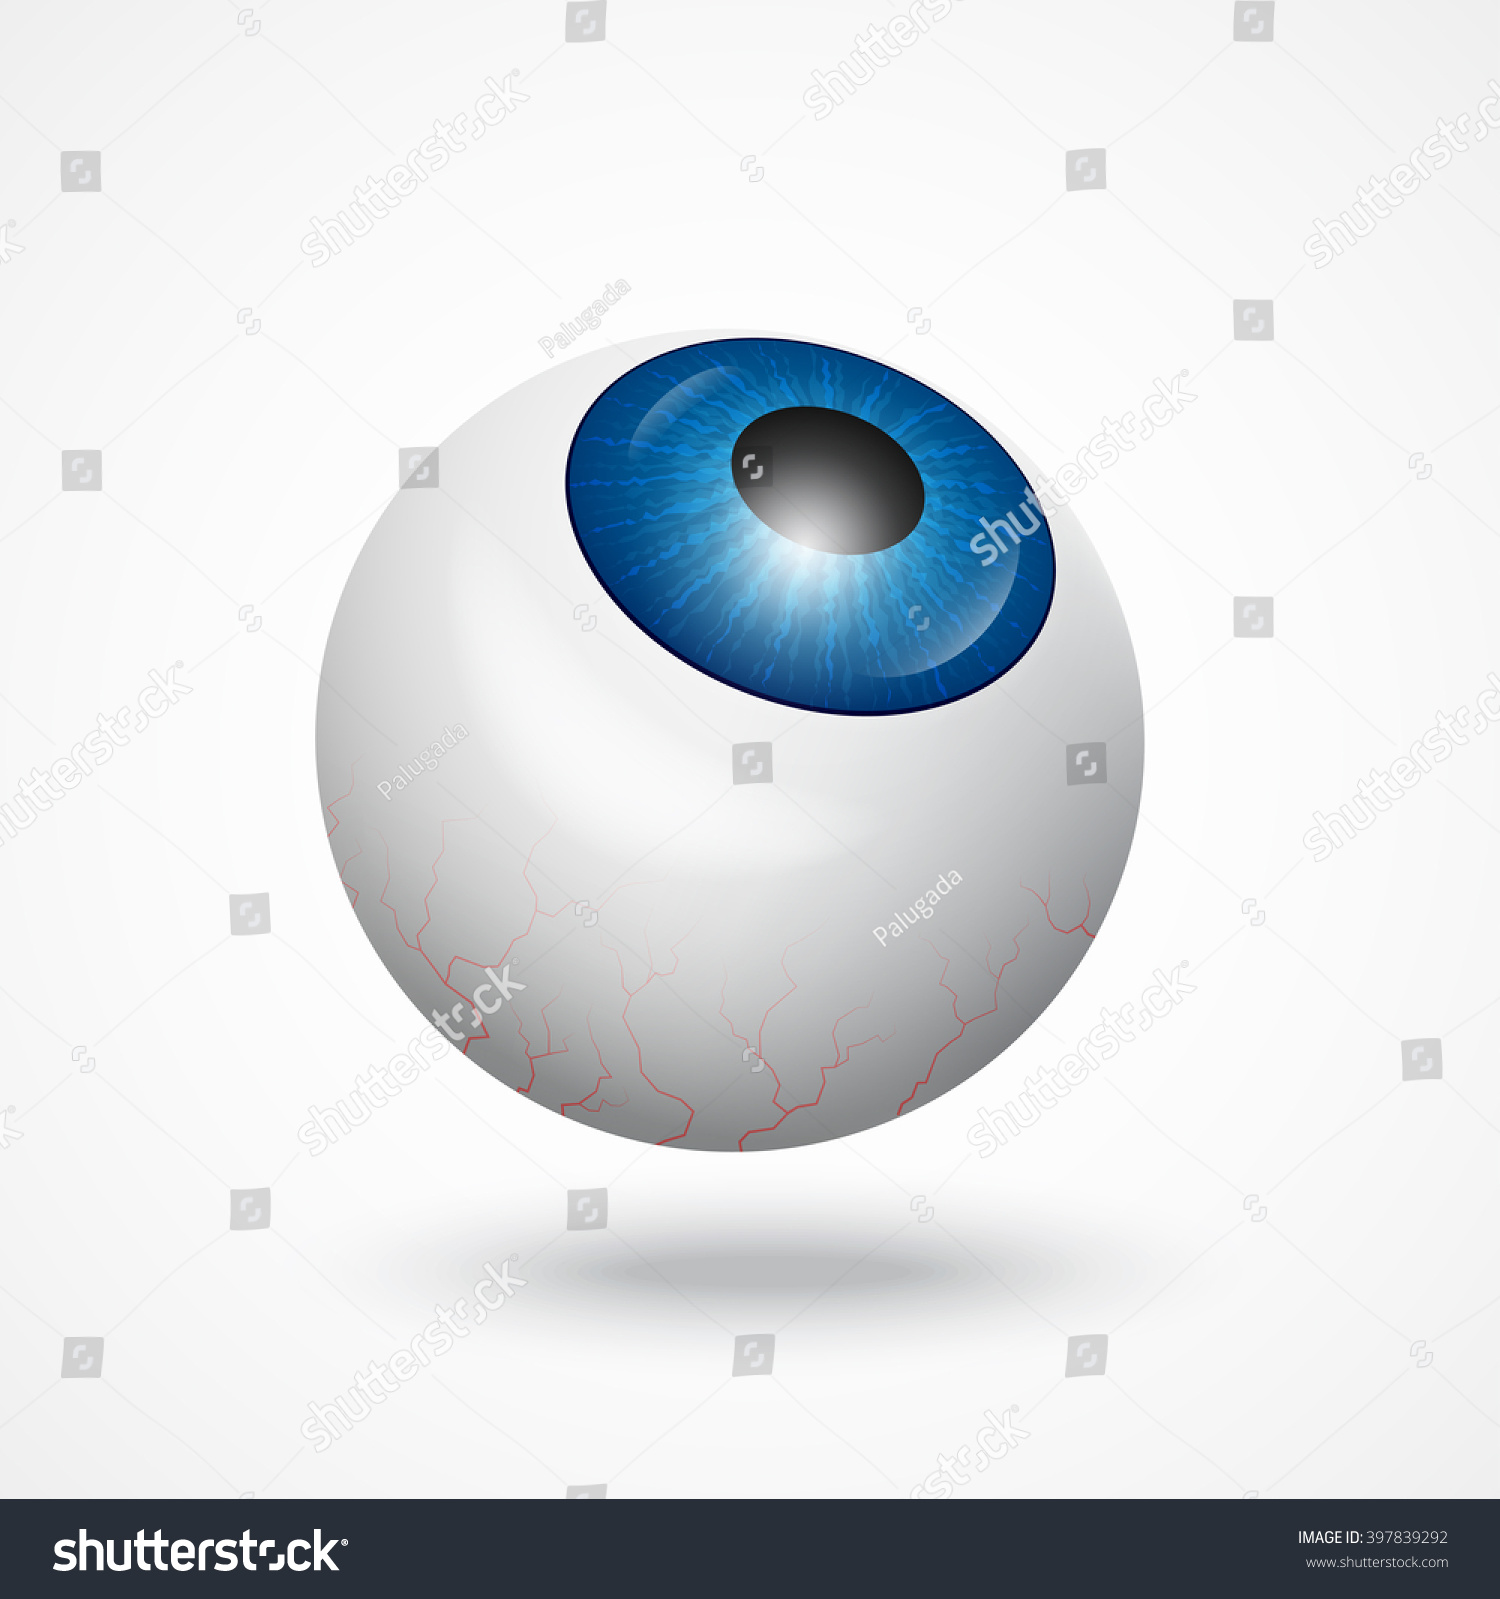 Eyeball Icon Isolated On White Stock Illustration 397839292 - Shutterstock